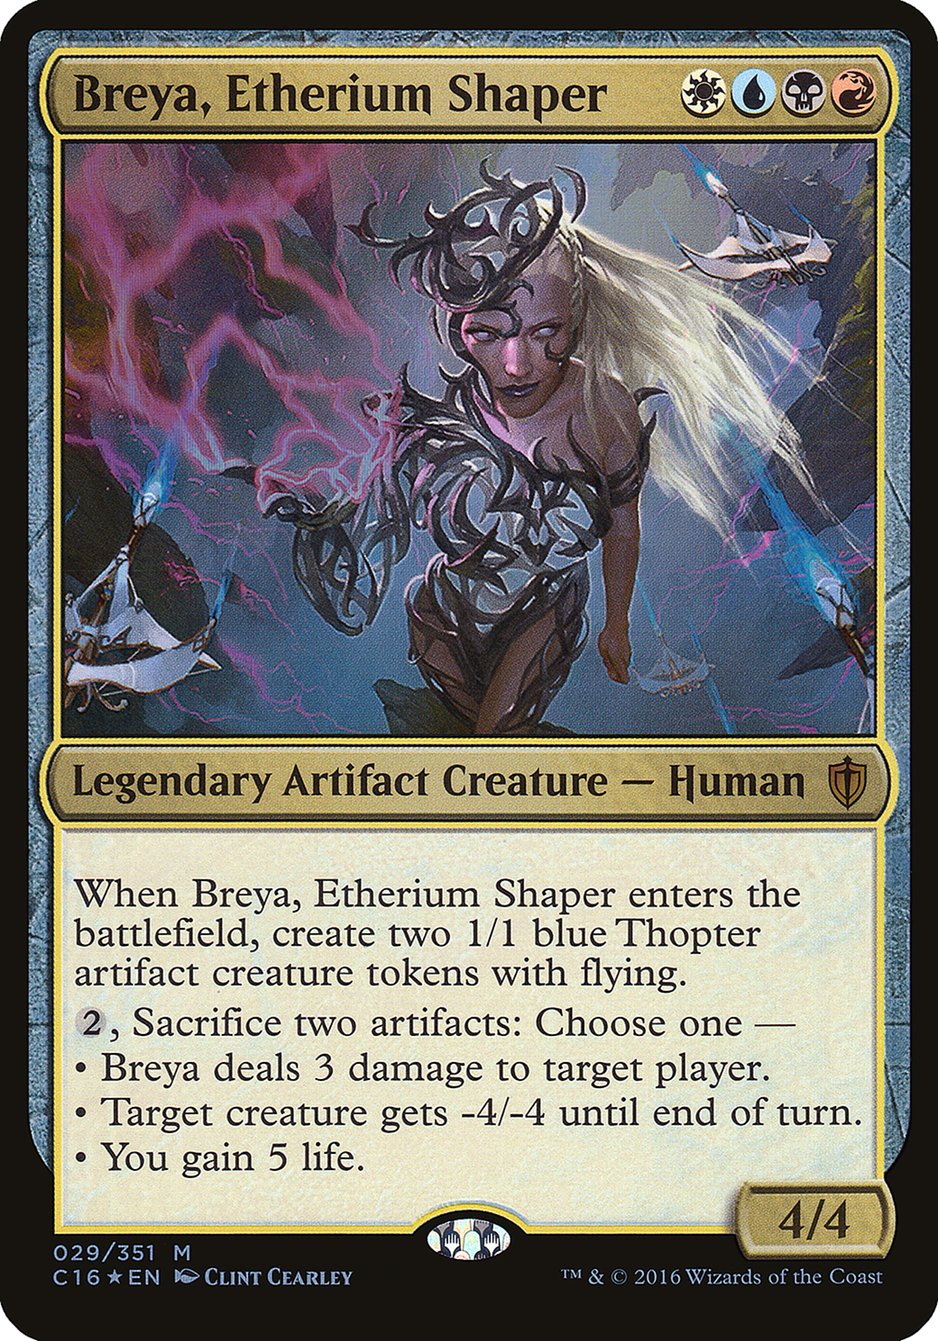 Breya, Etherium Shaper - MTG Card versions